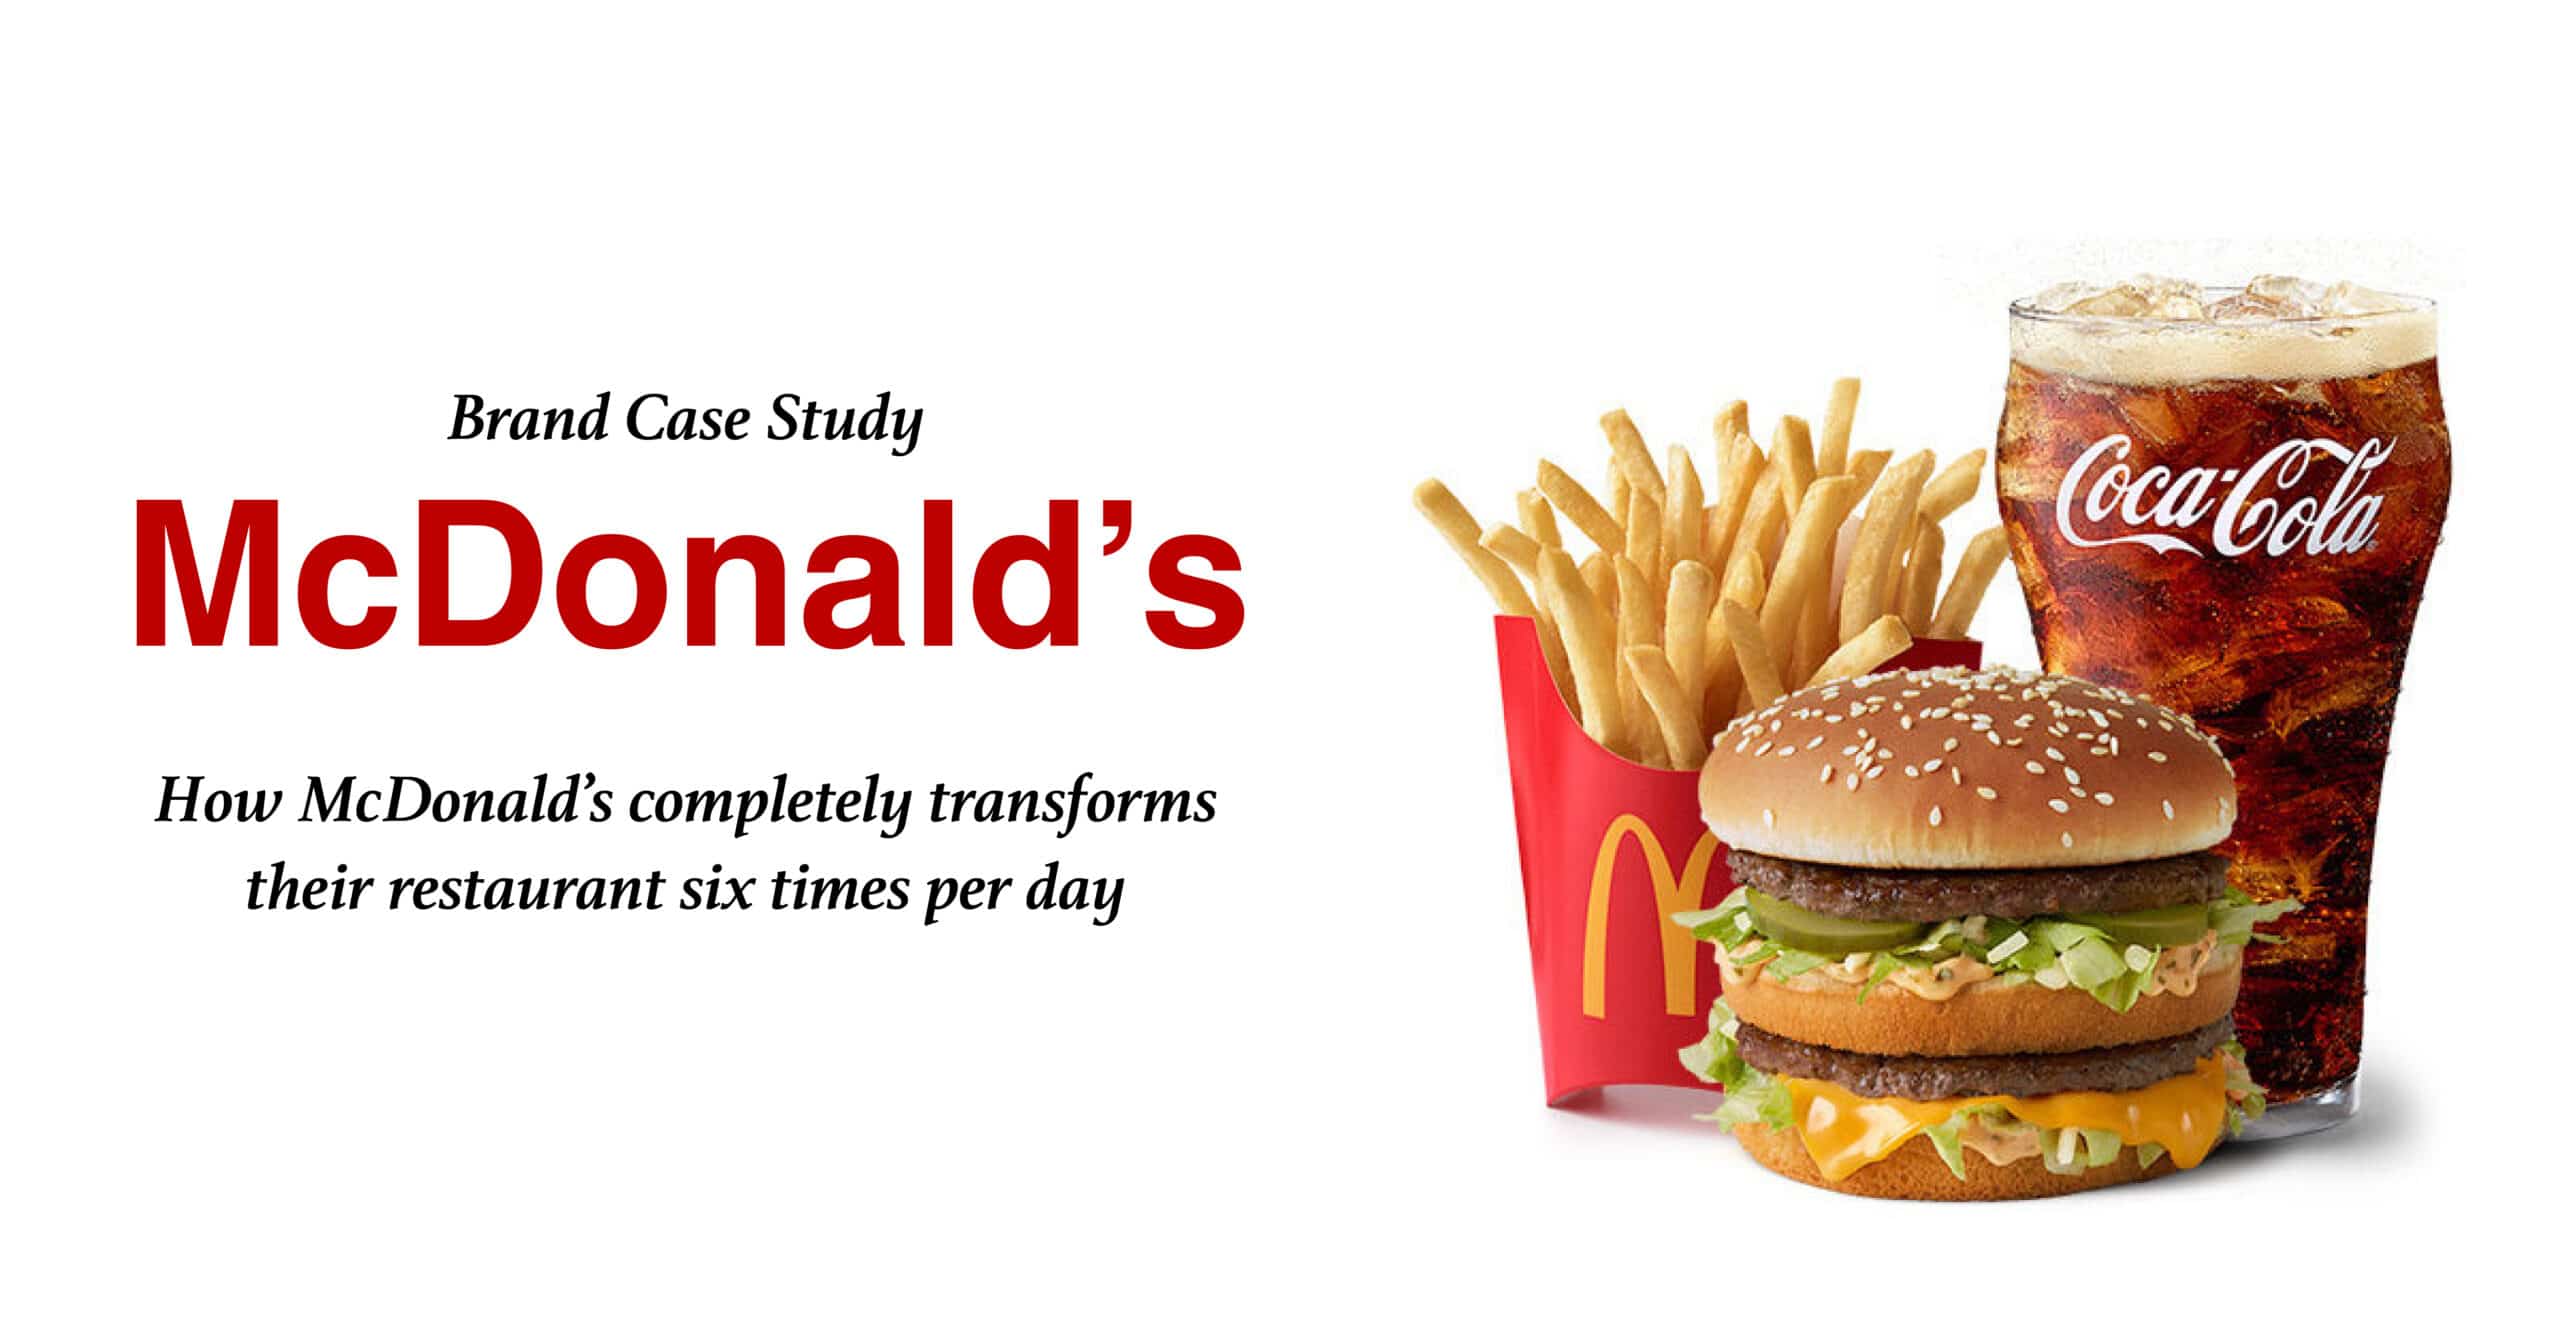 McDonald's case study